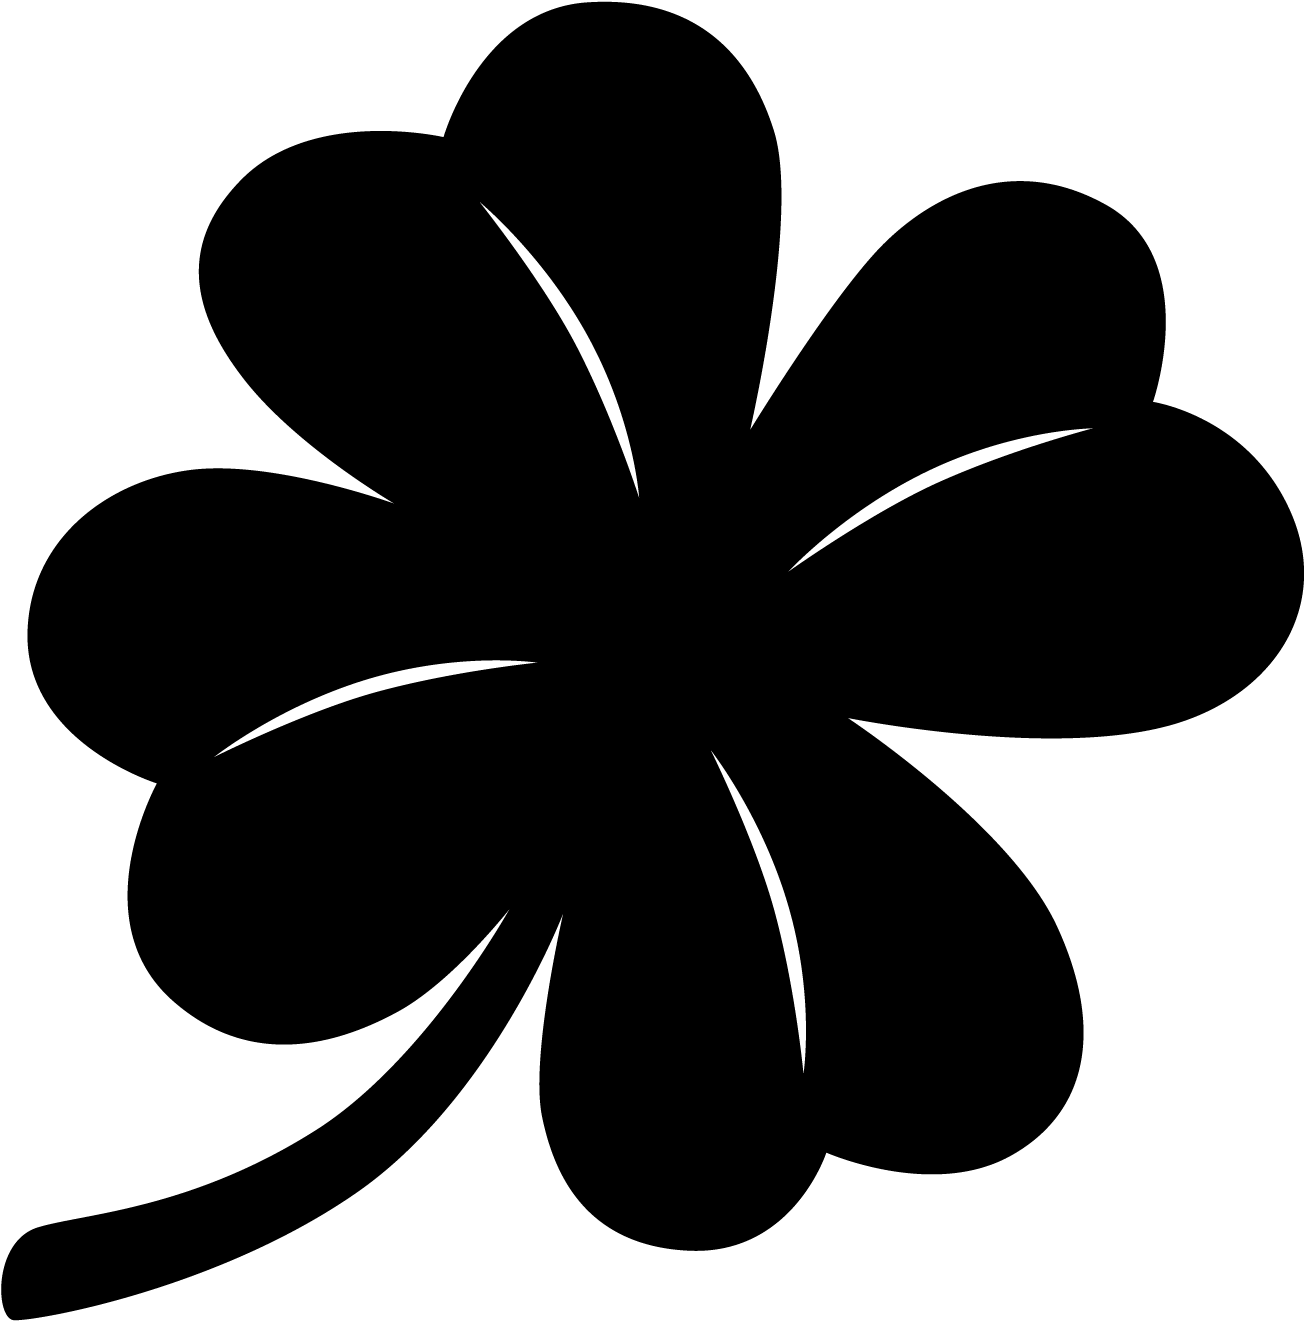 Four Leaf Clover - Black Four Leaf Clover (1729x1729)